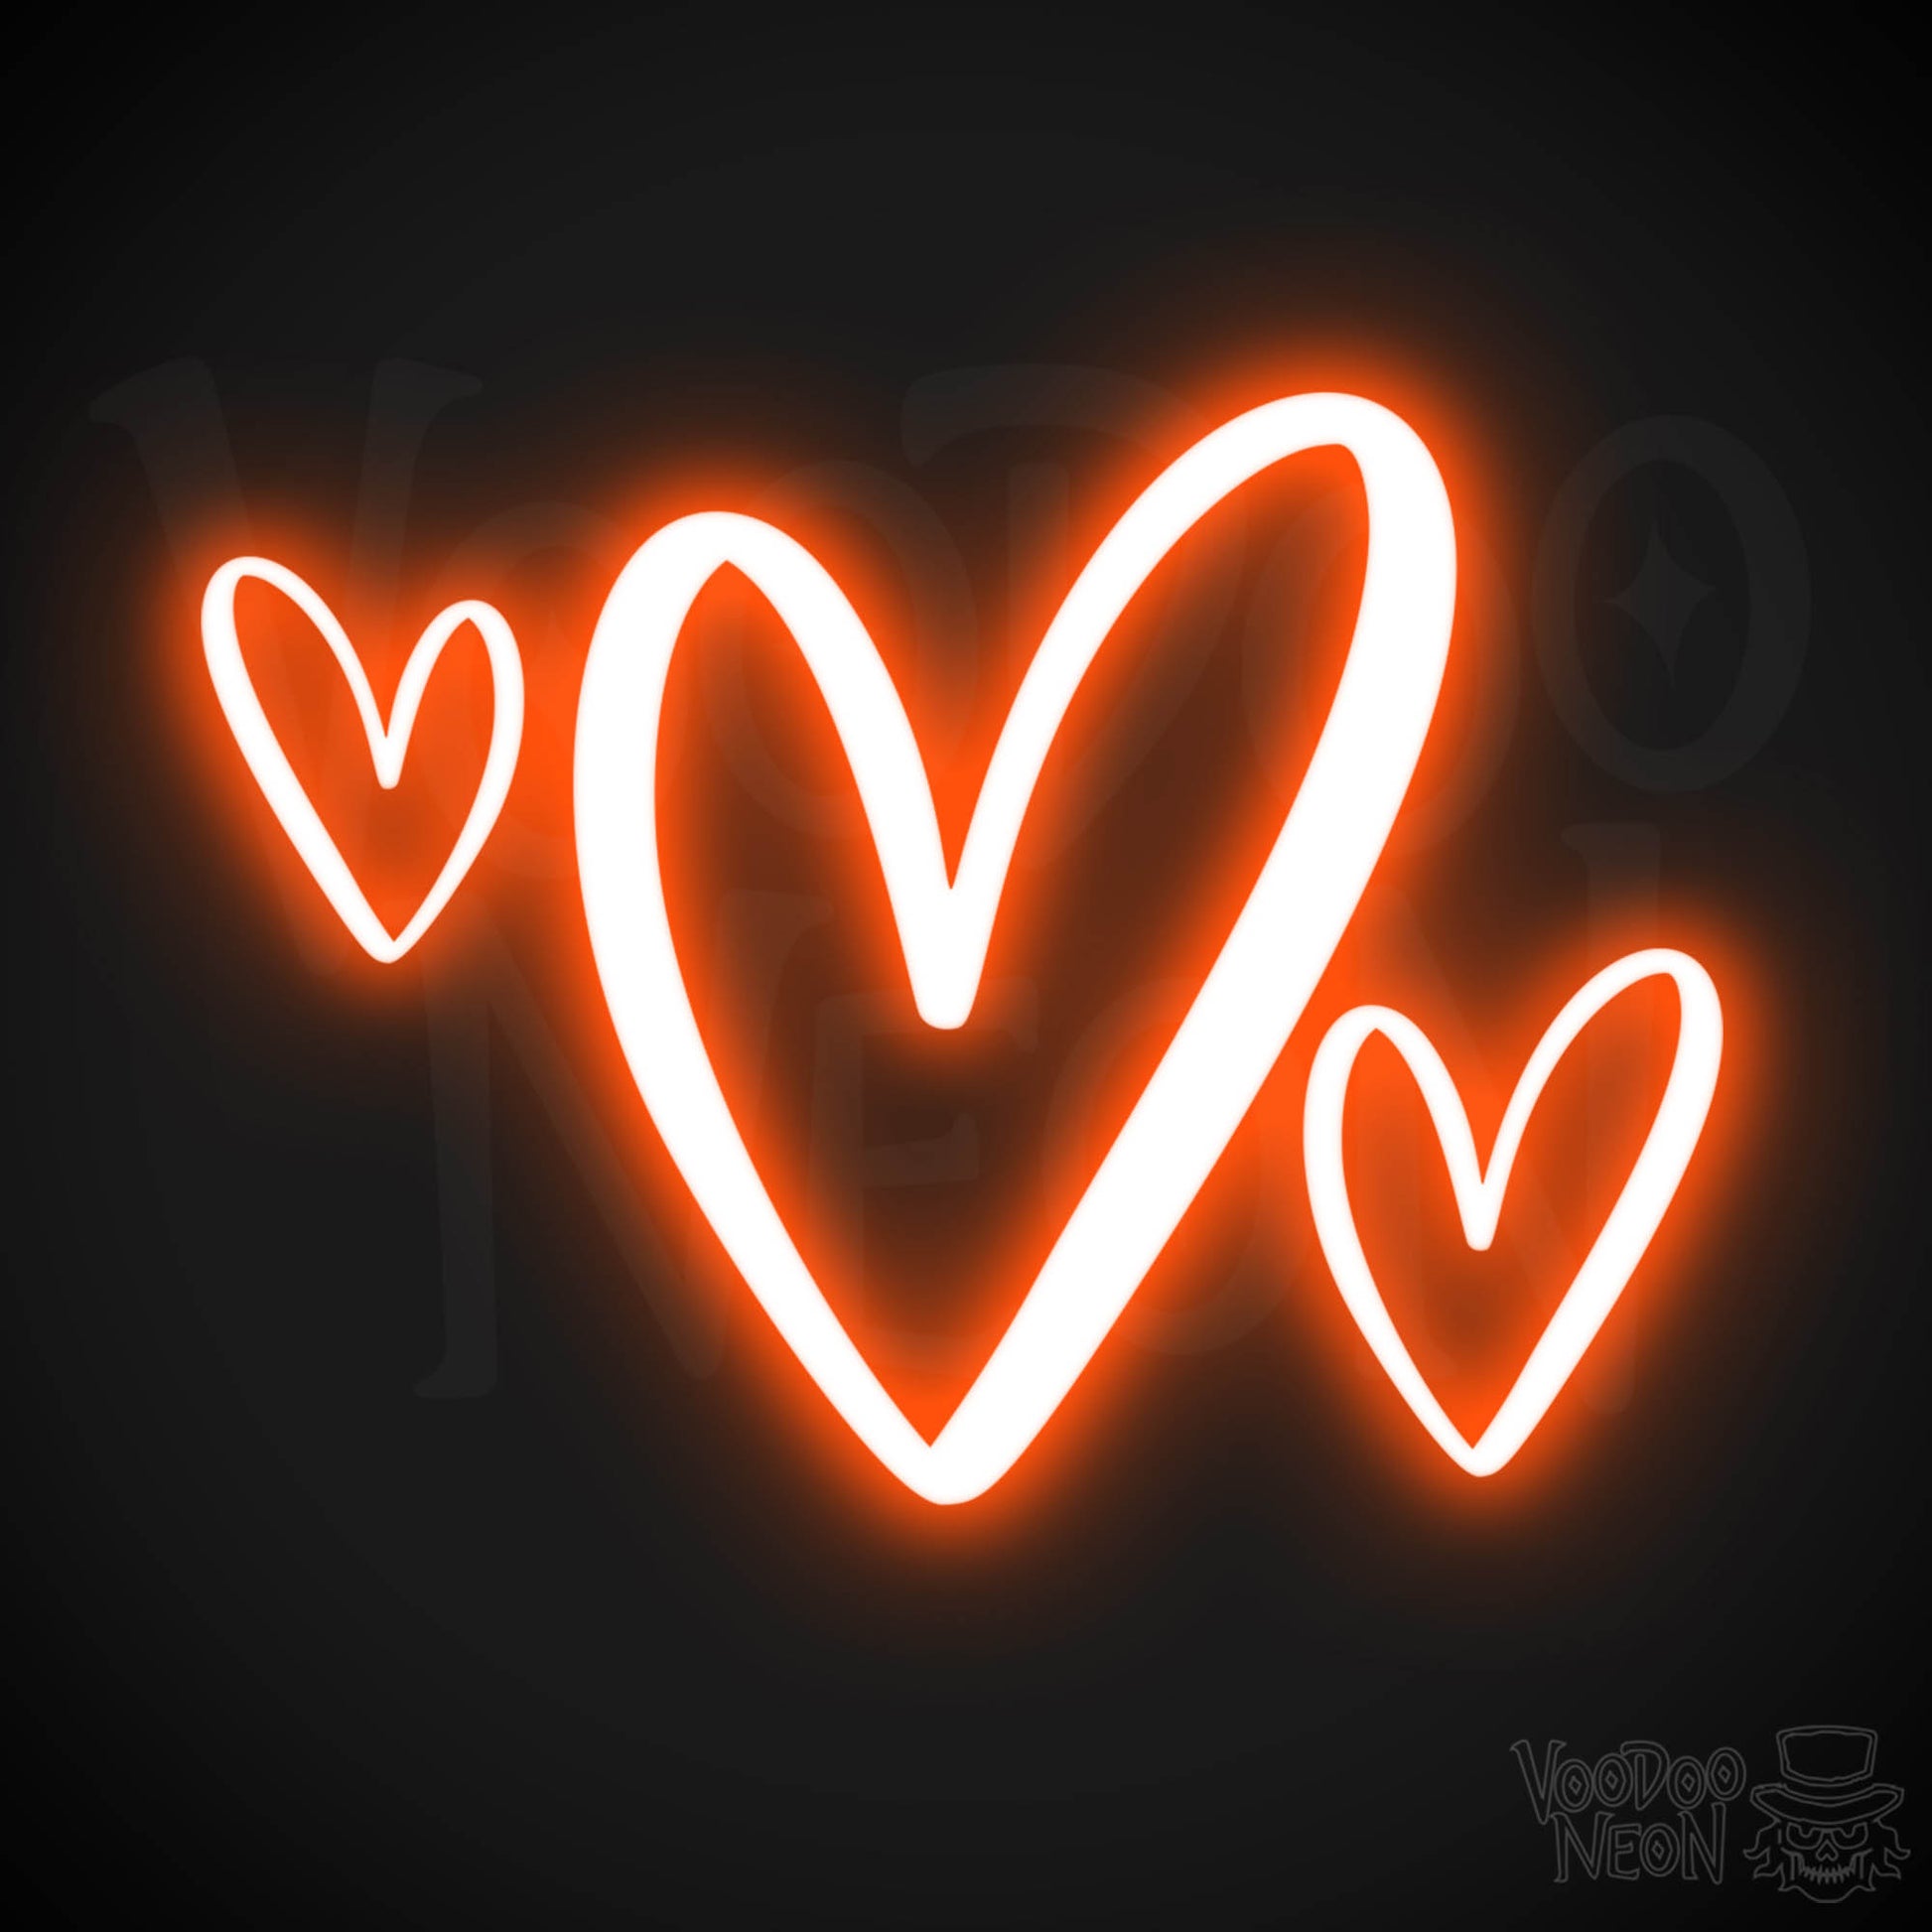 Neon Love Heart - Love Heart Neon Sign - LED Wall Art - Color Orange